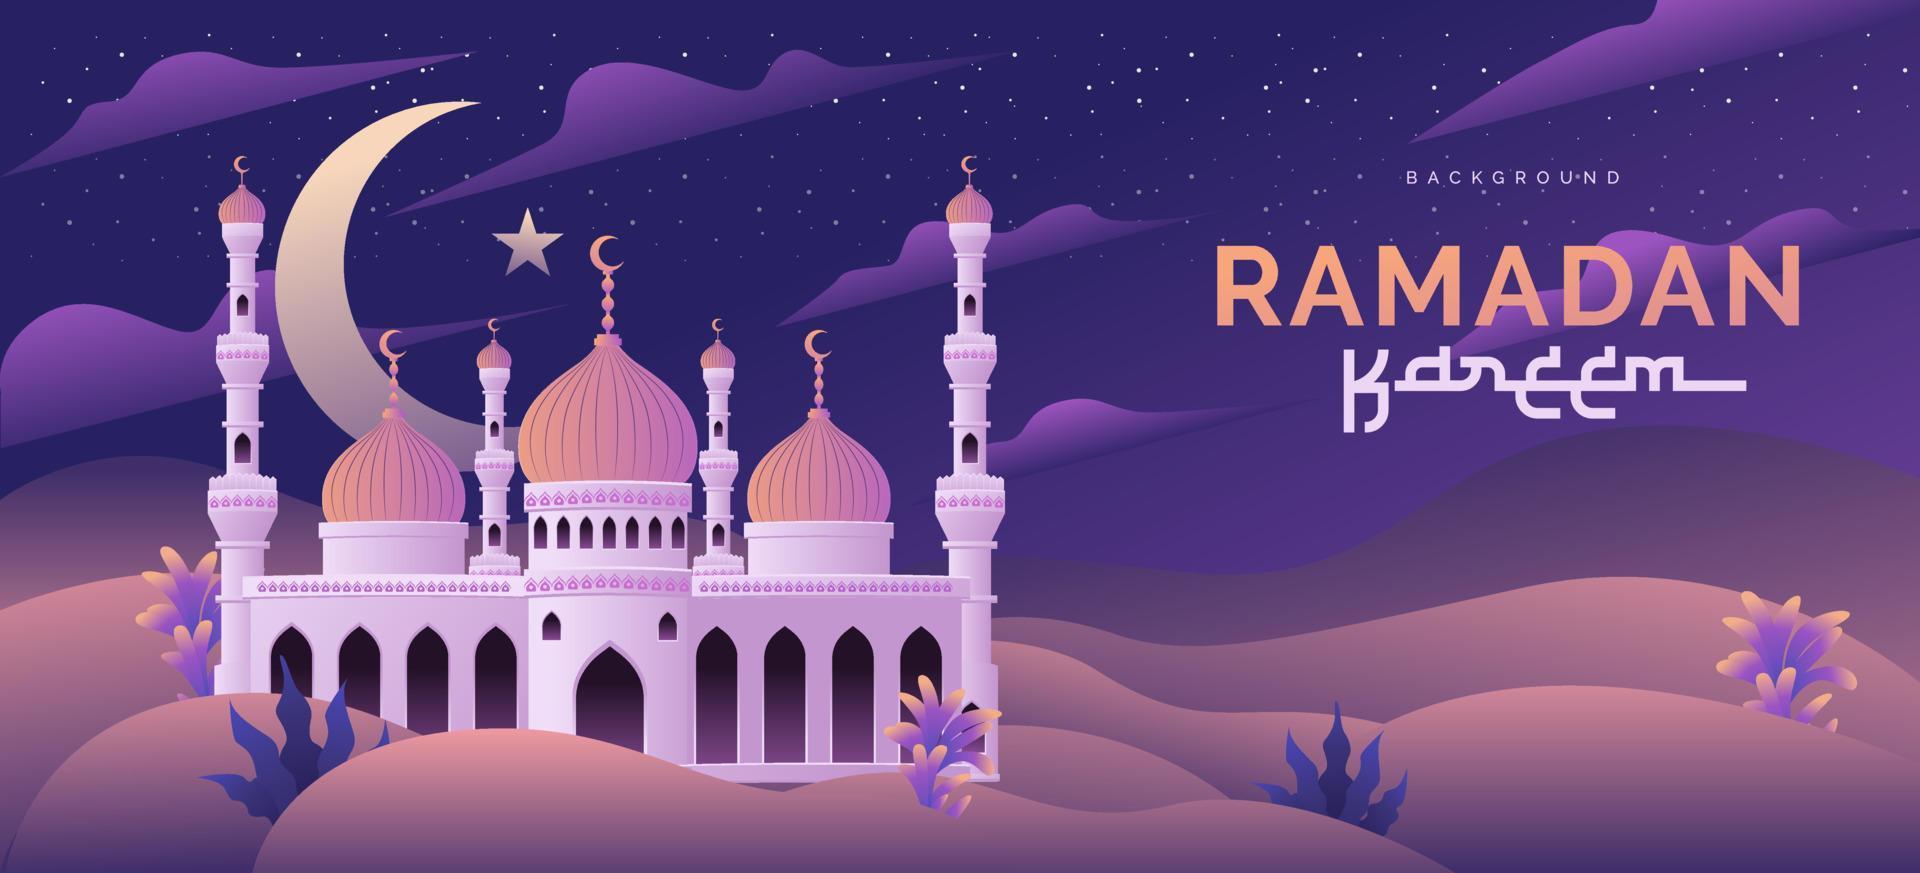 mesquita beleza Ramadã kareem bandeira Projeto modelo vetor ilustração